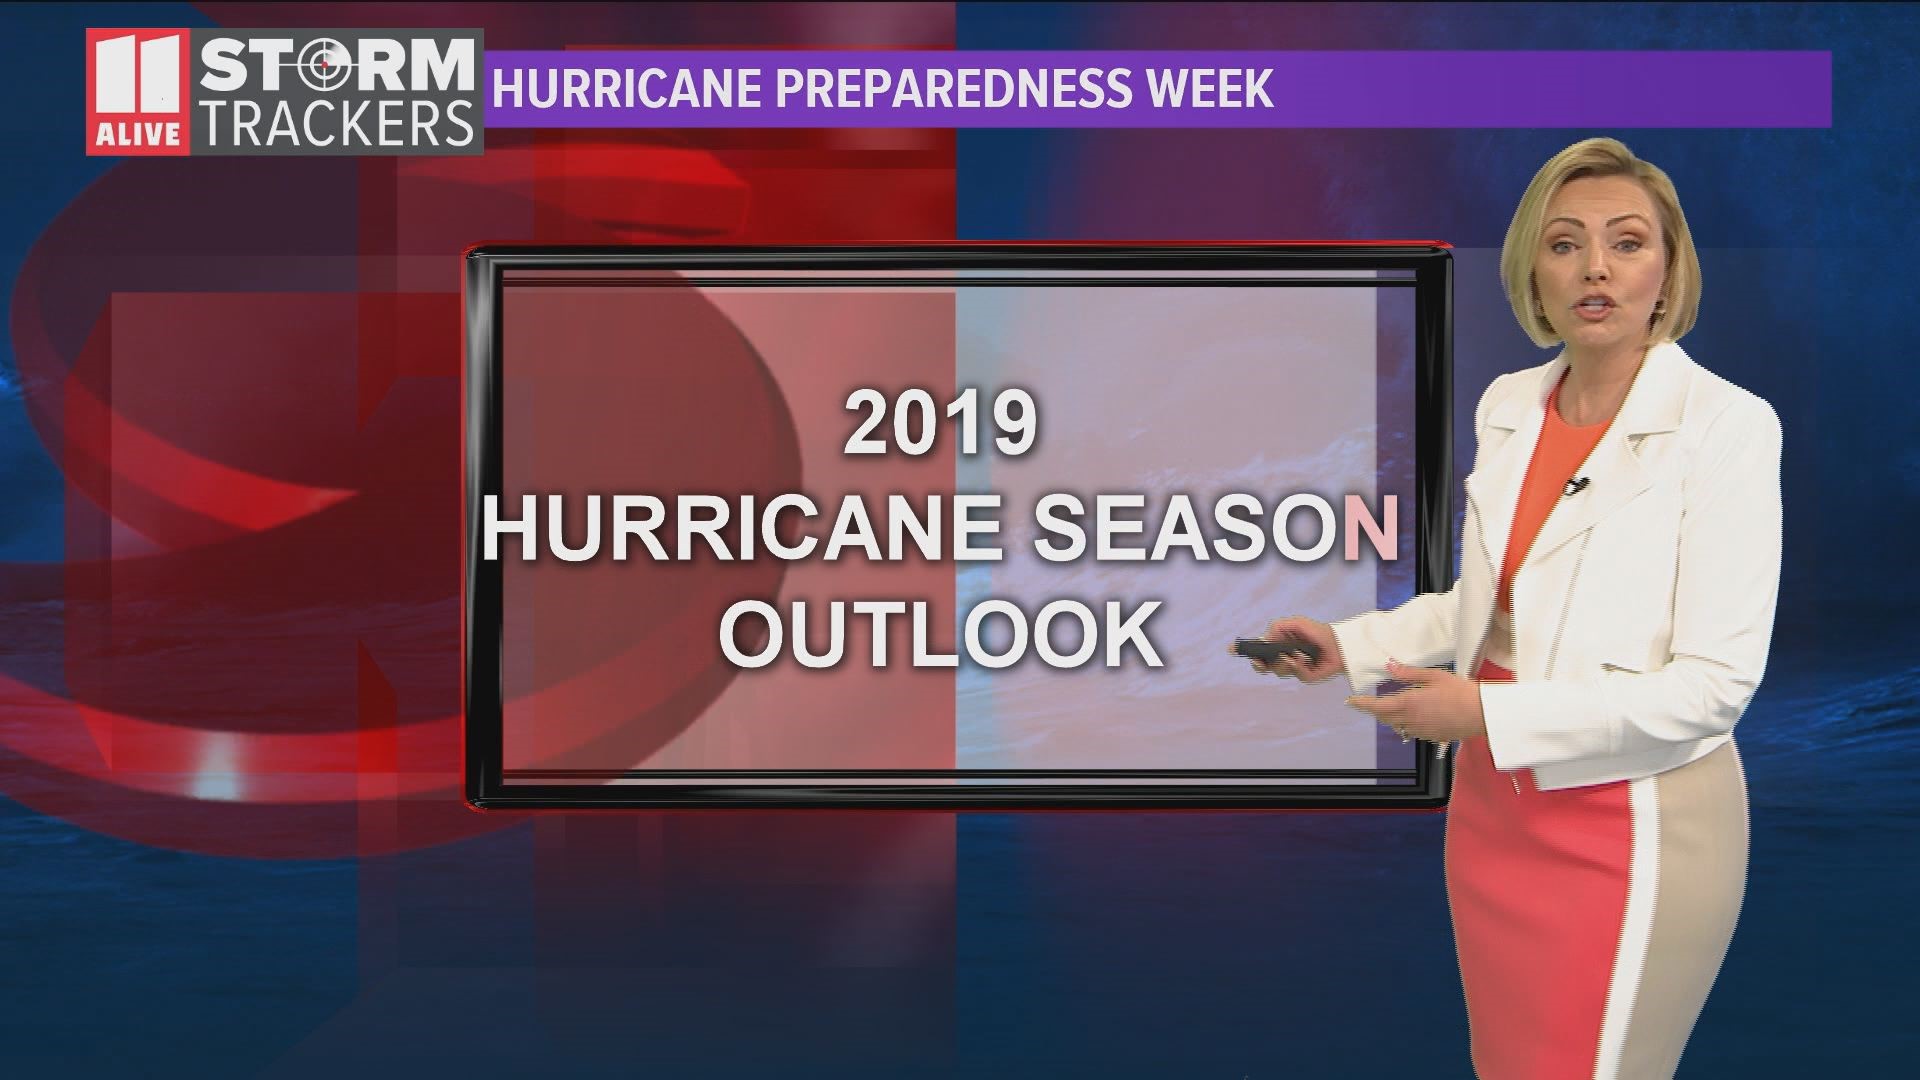 11Alive StormTracker meteorologist Samantha Mohr previews the prediction for the 2019 hurricane season.